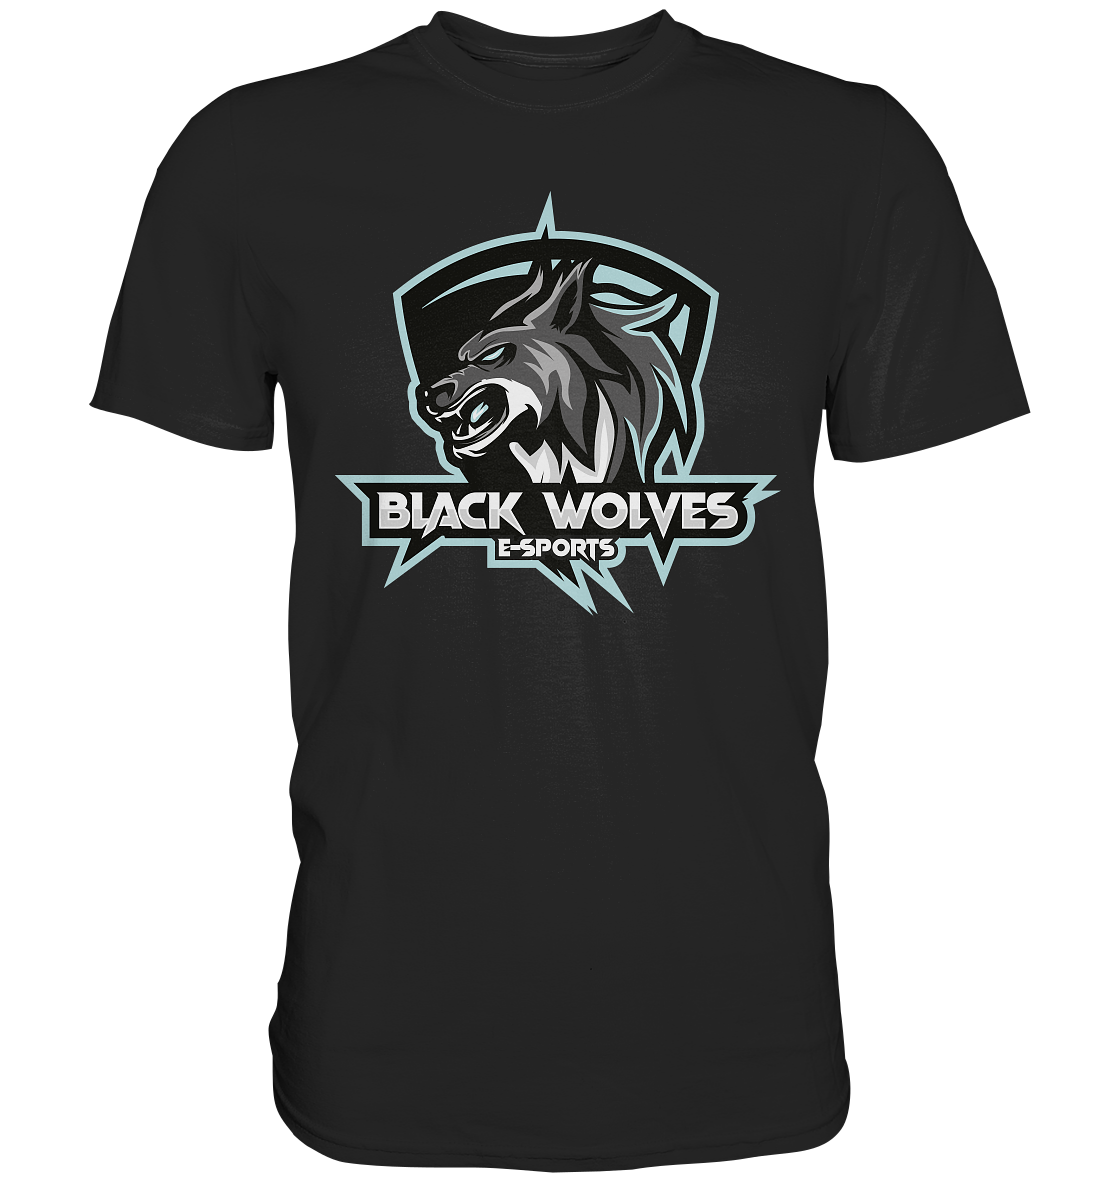 BLACK WOLVES E-SPORTS - Basic Shirt